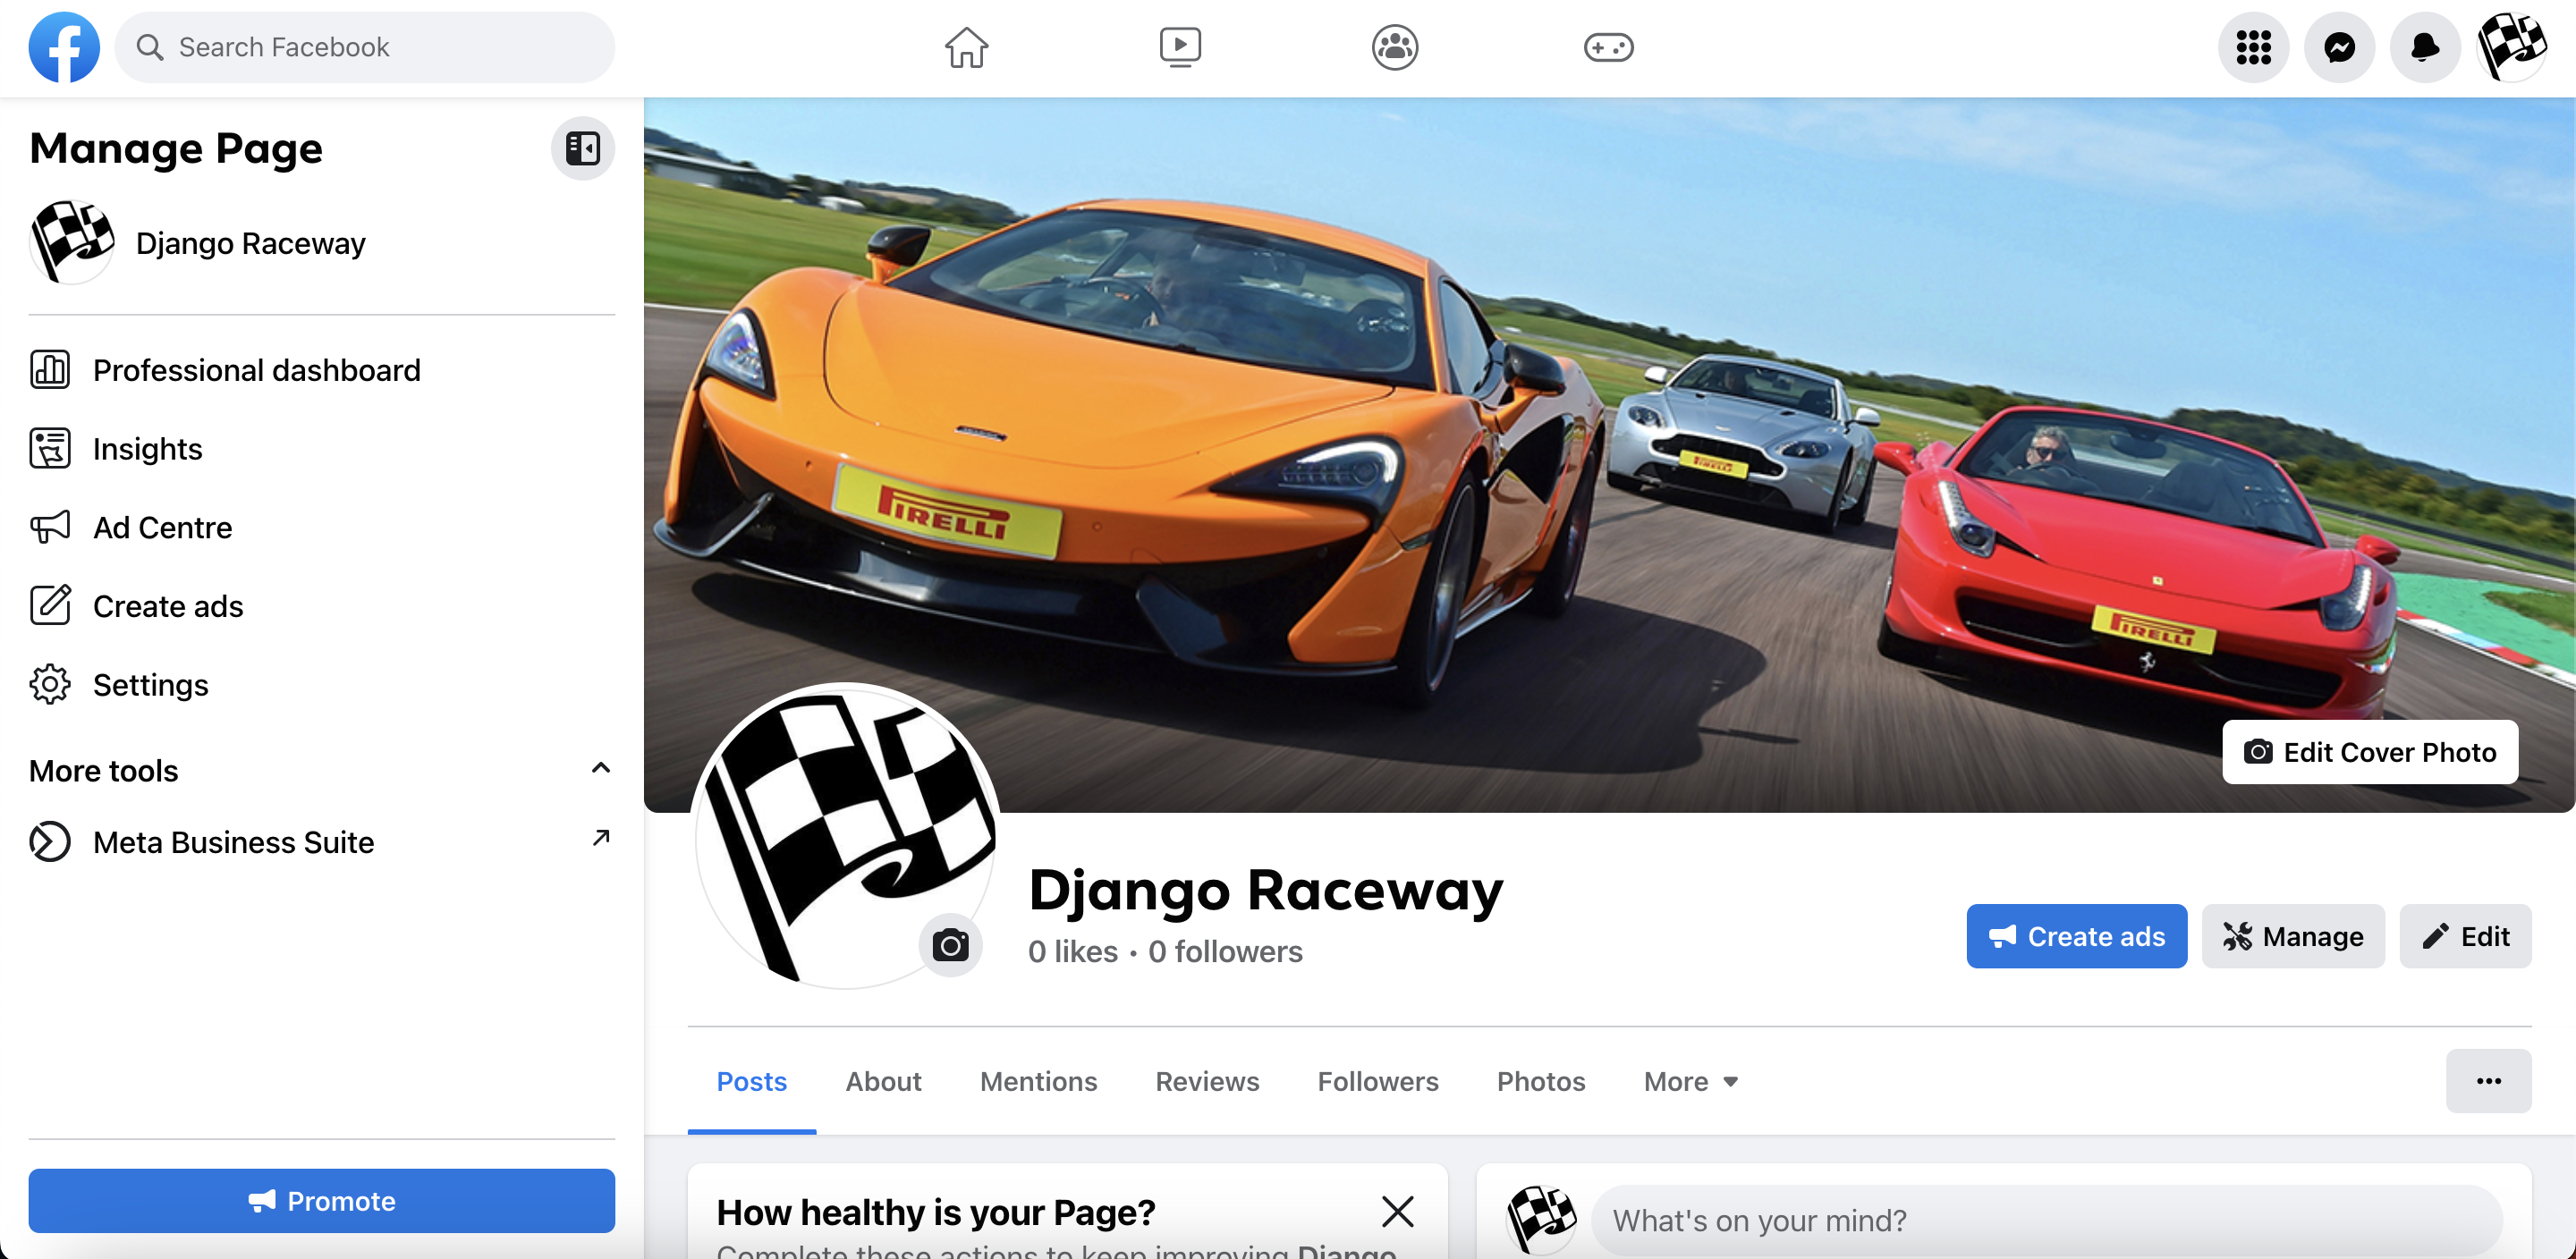 Django-Raceway Facebook page